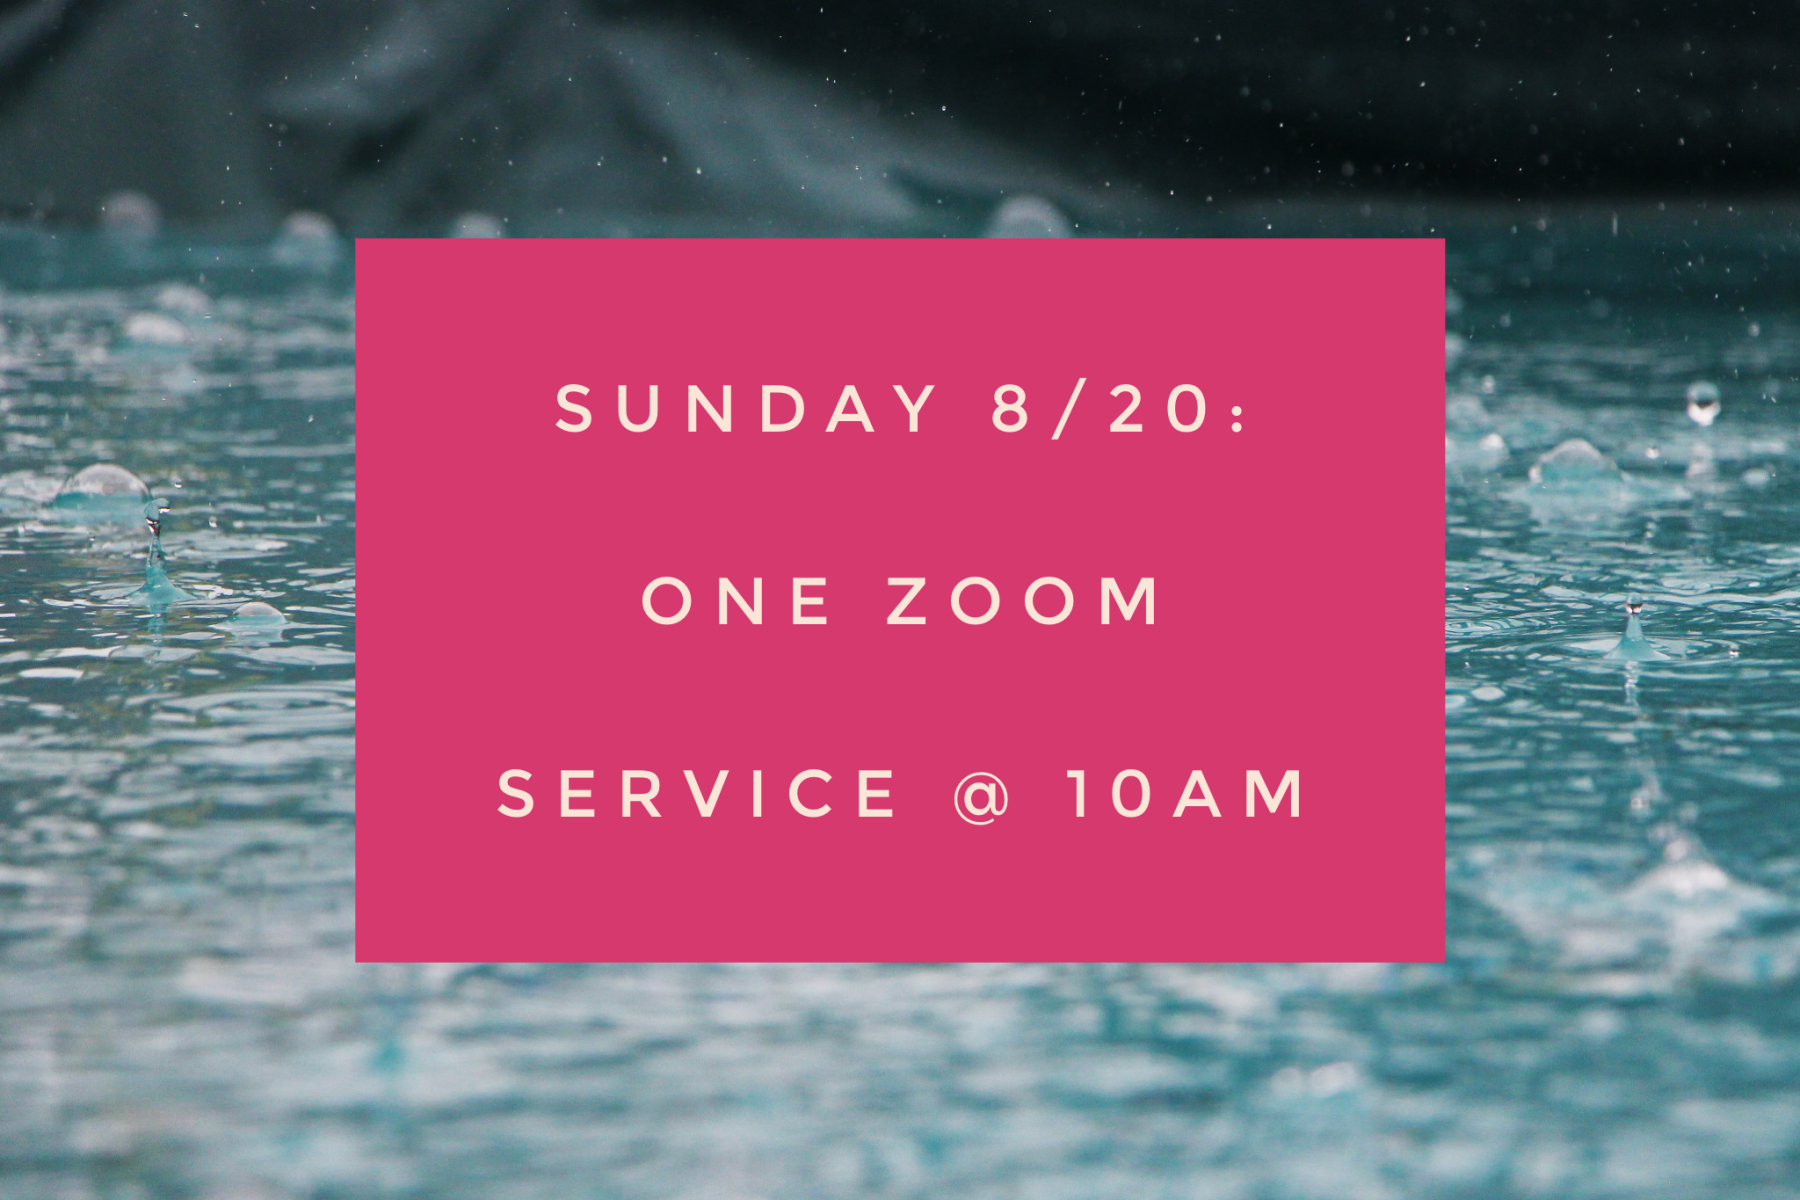 Sunday, 8/20 Worship Service Update!